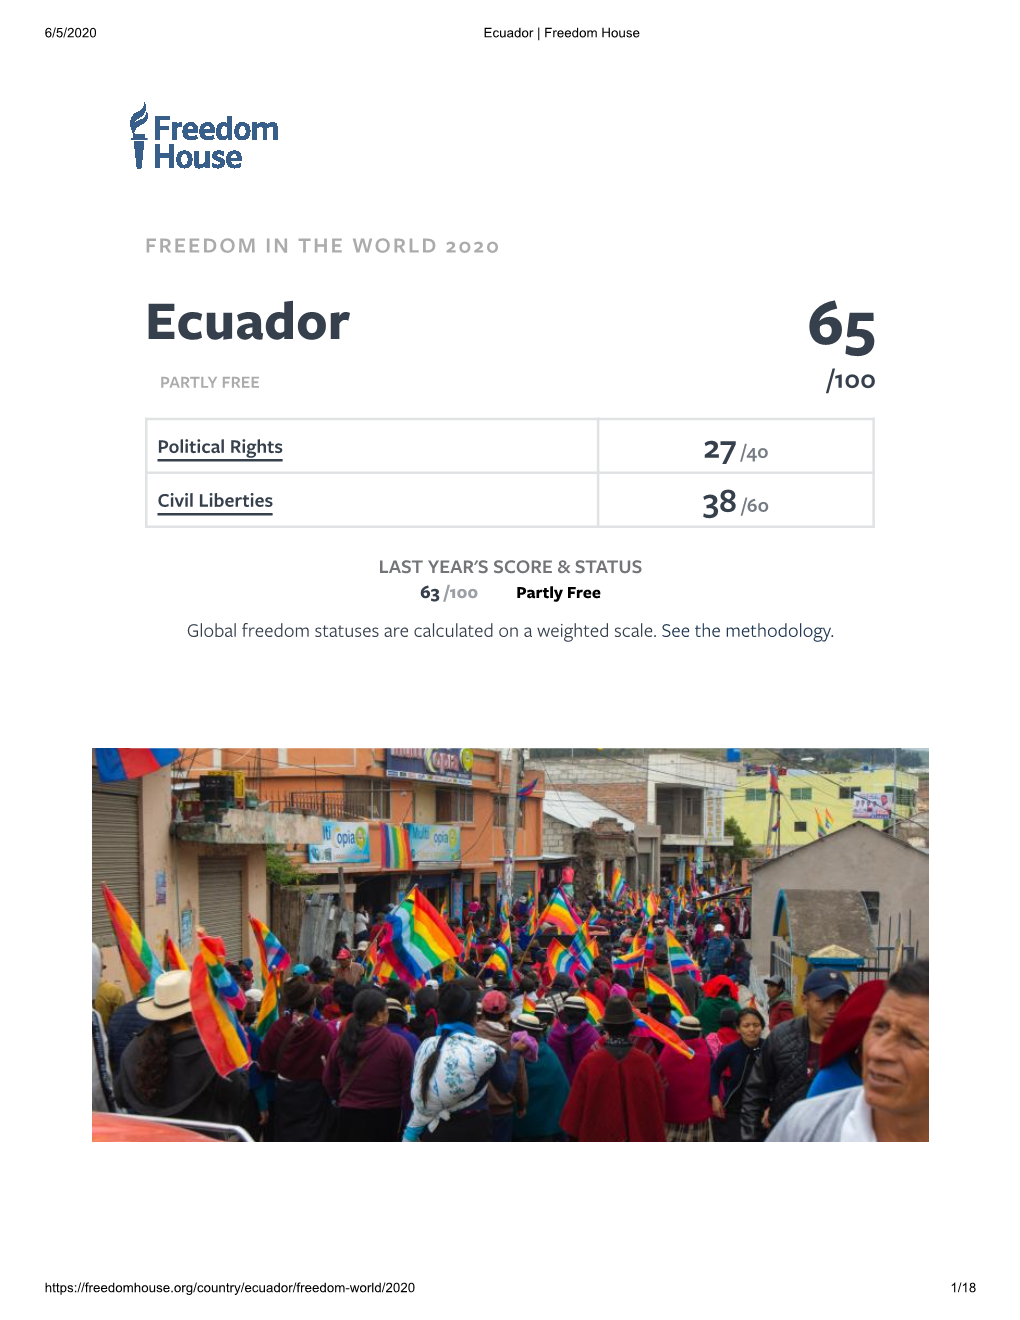 Freedom in the World Report, Ecuador